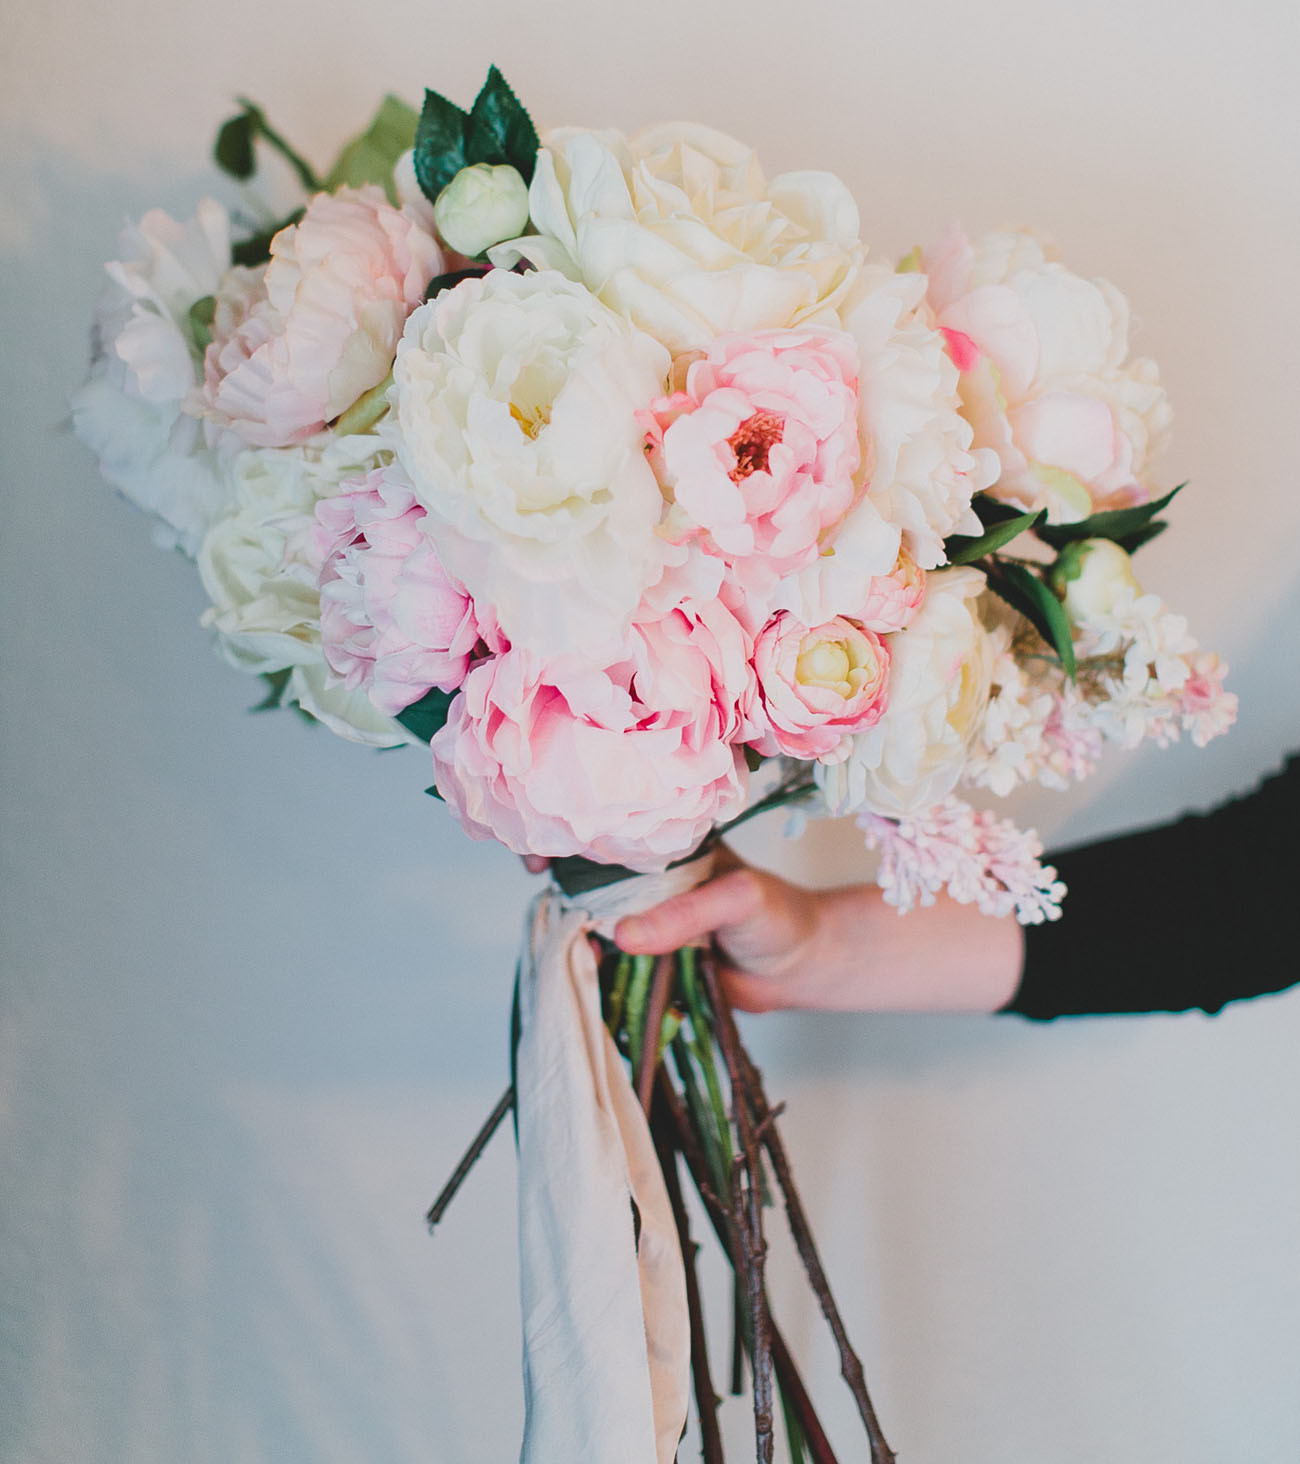 DIY Wedding Flower Bouquet
 DIY Silk Flower Bouquet with Afloral Green Wedding Shoes